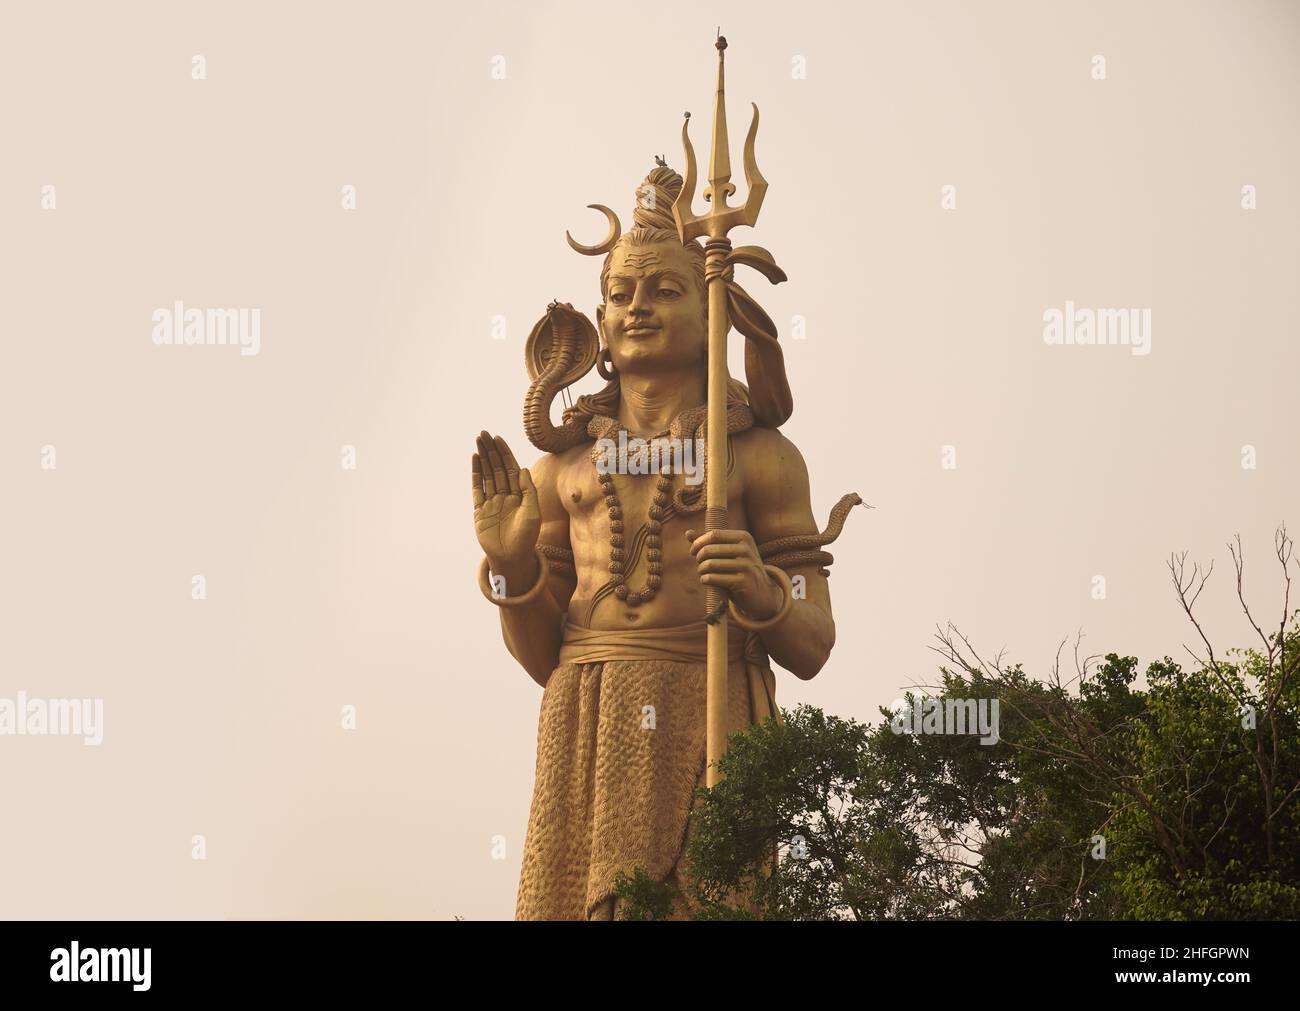 hindu god shiva statue with beautiful landscape - God Shiva Image Stock Photo